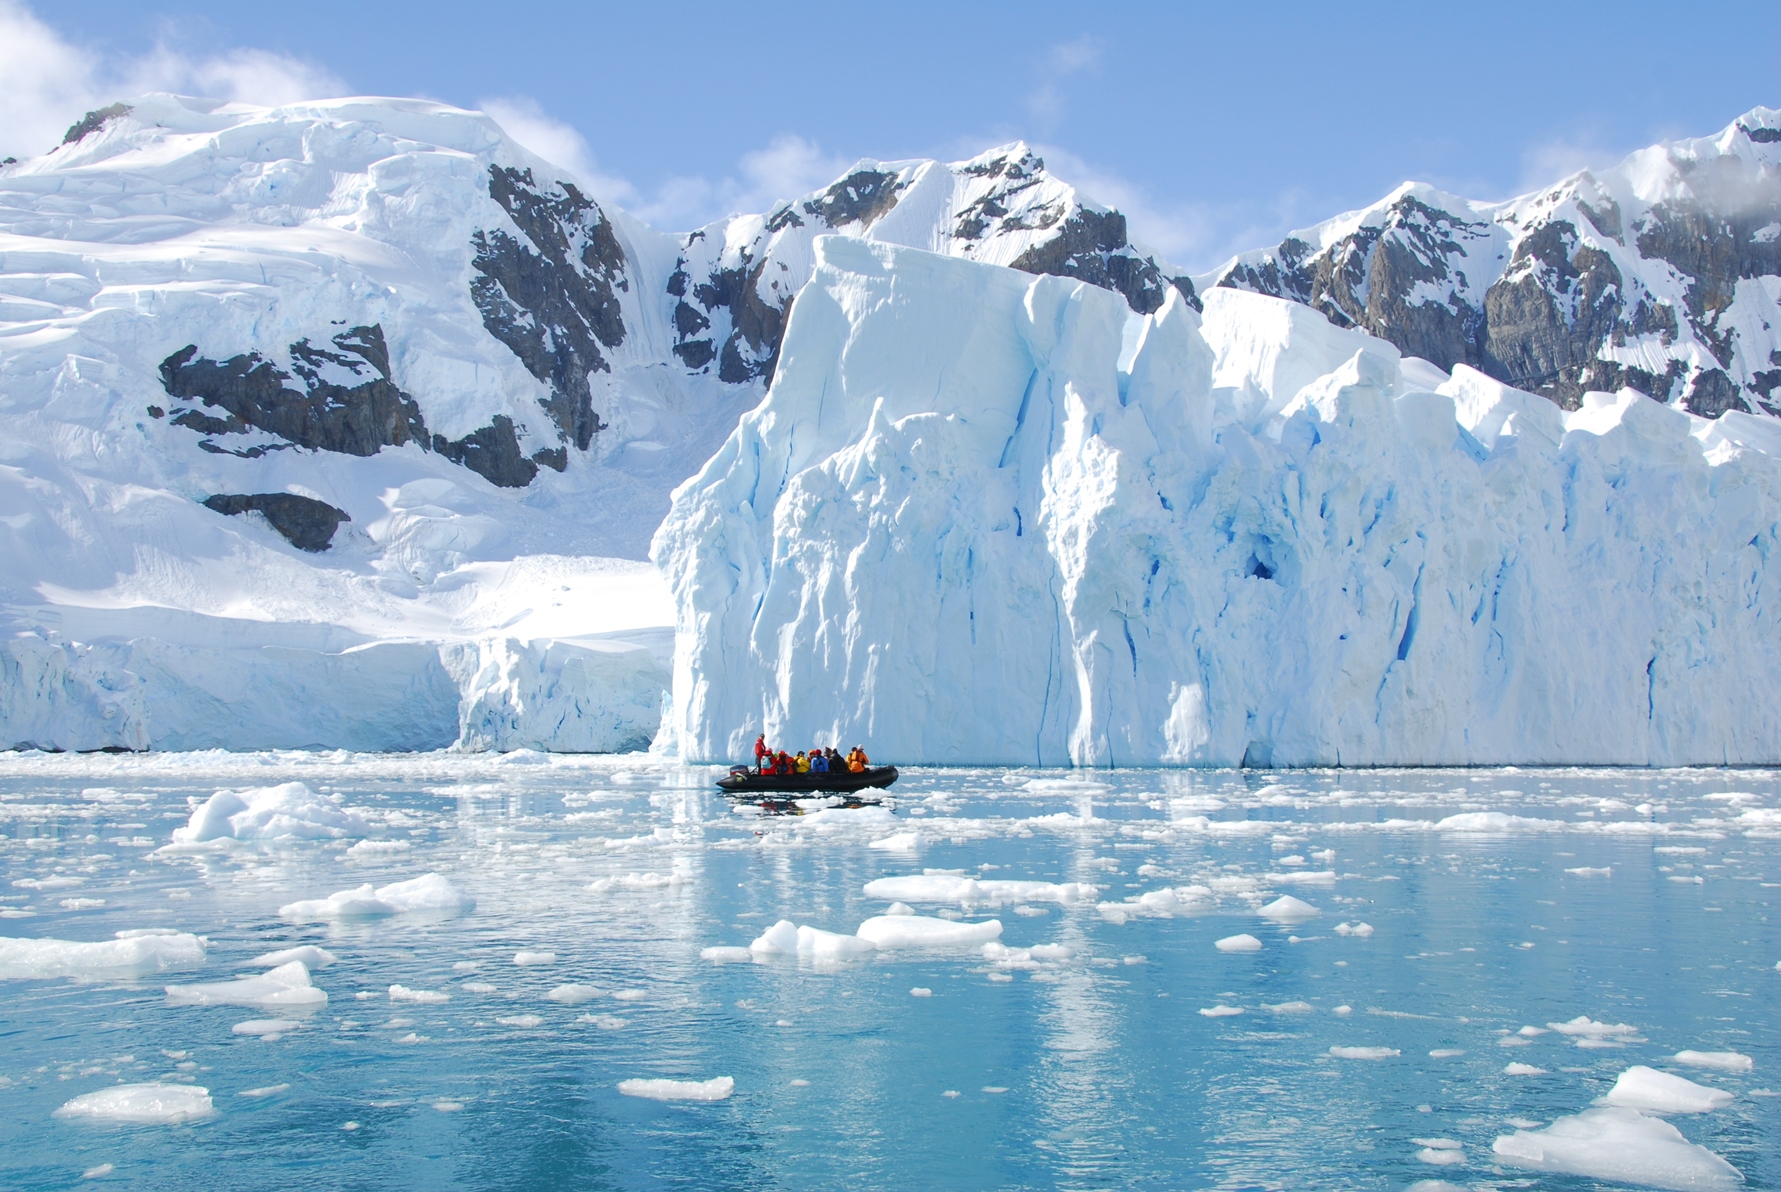 Zodiac and glacier in the Antarctic